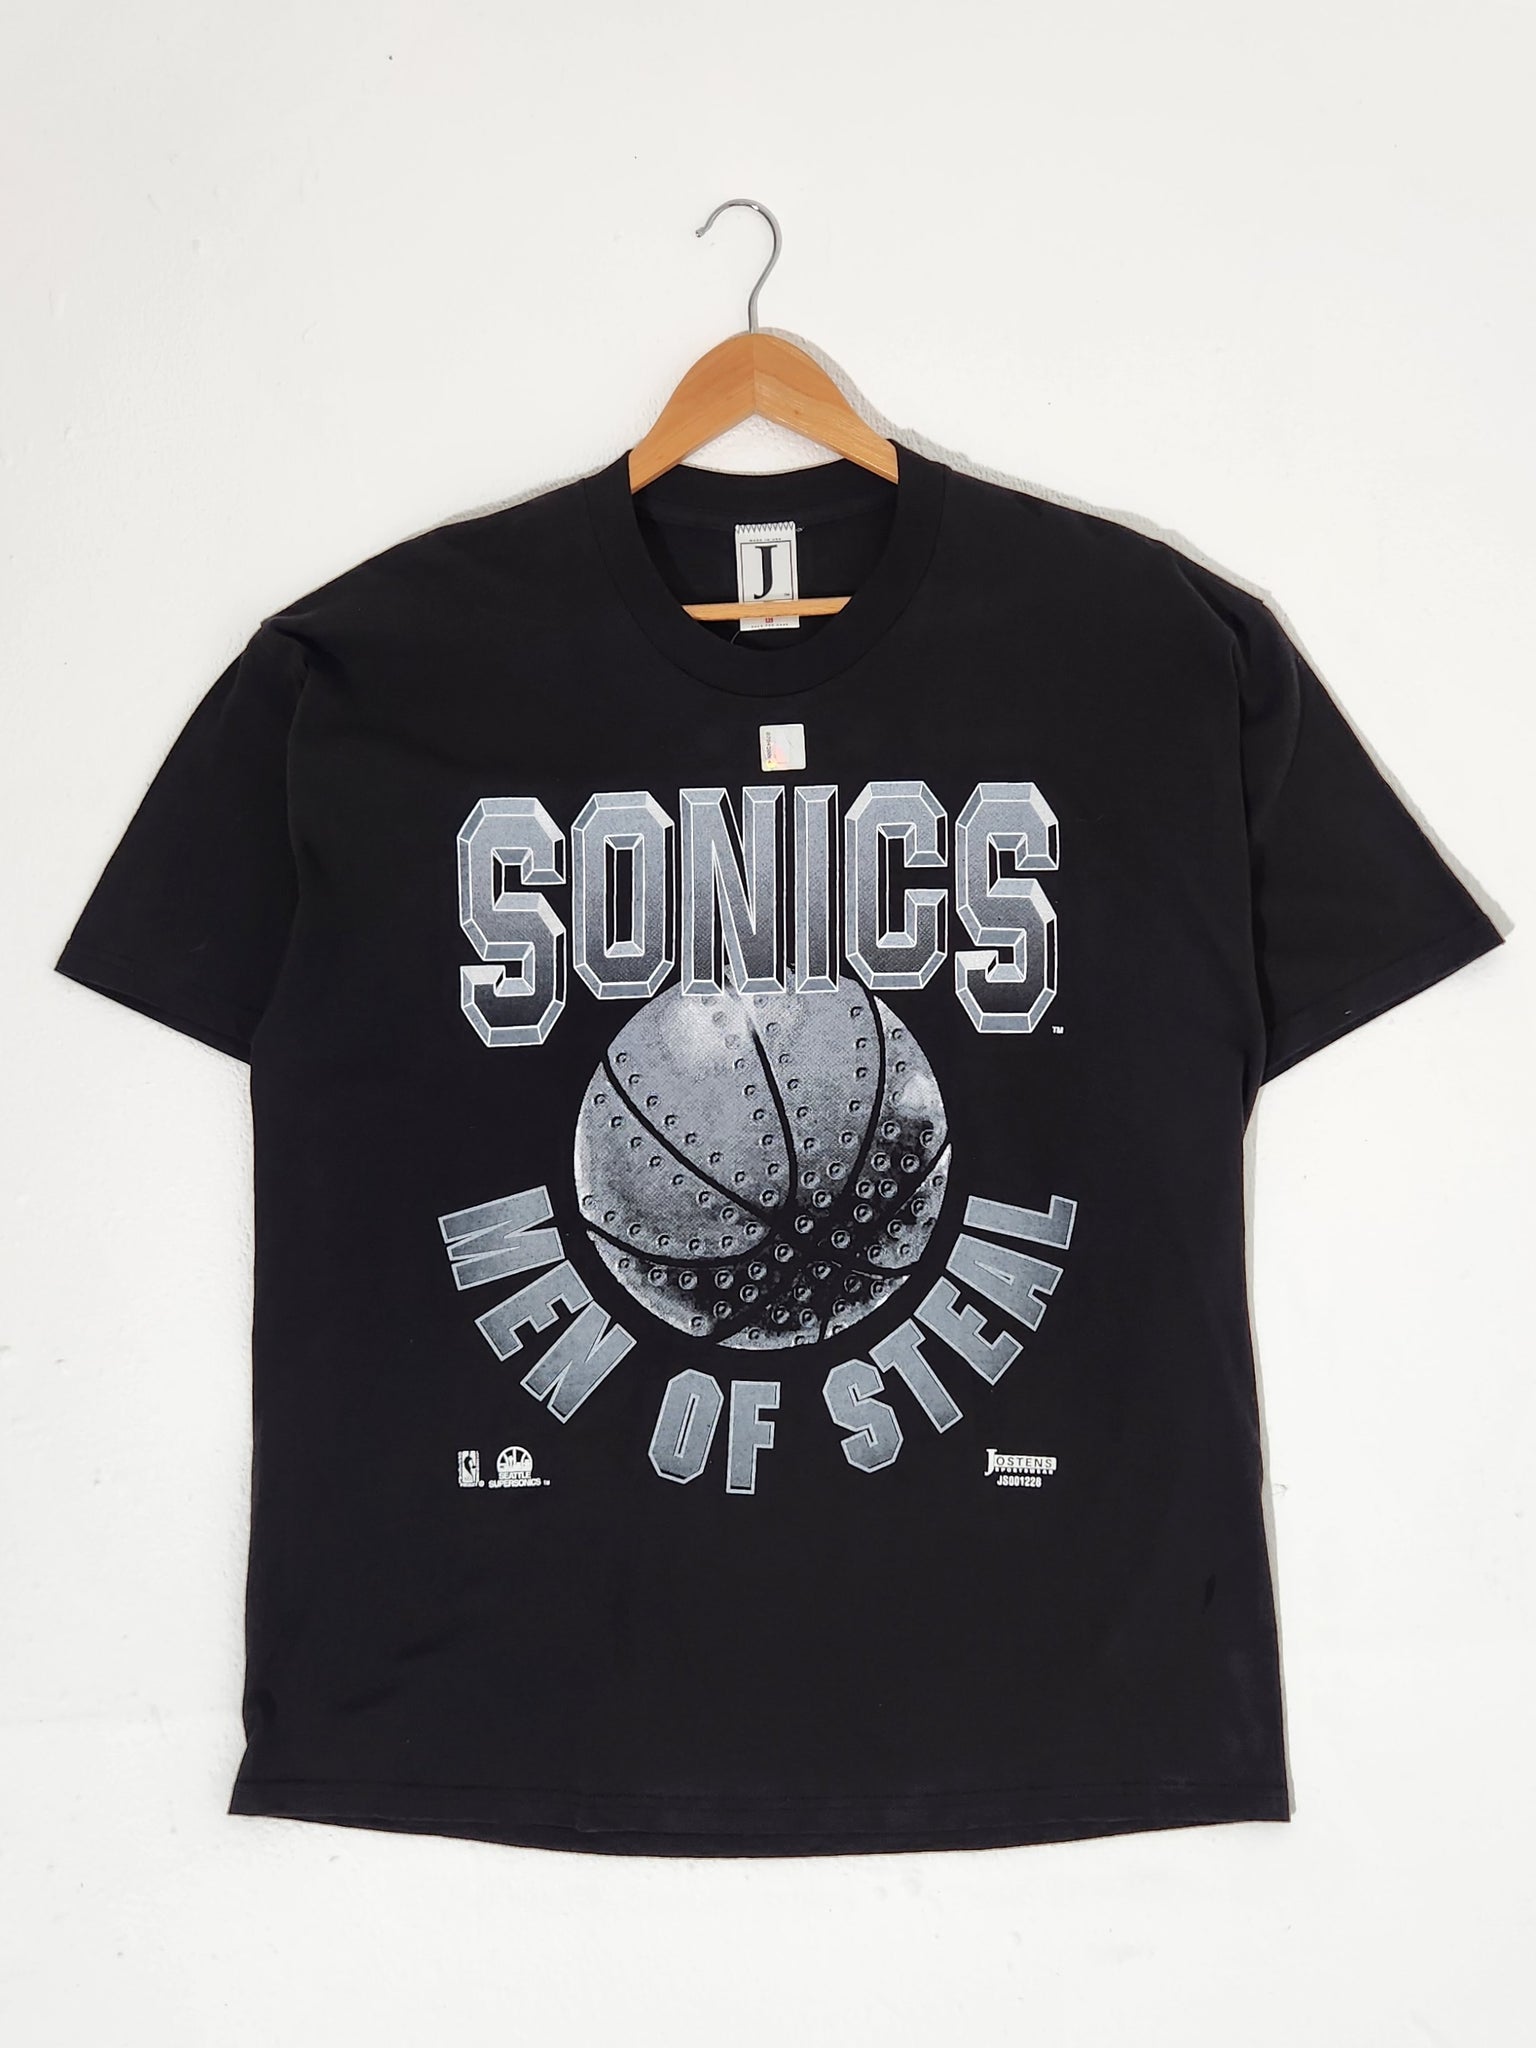 Vintage 90s Starter Seattle Supersonics NBA Basketball Sweatshirt XL Sonics